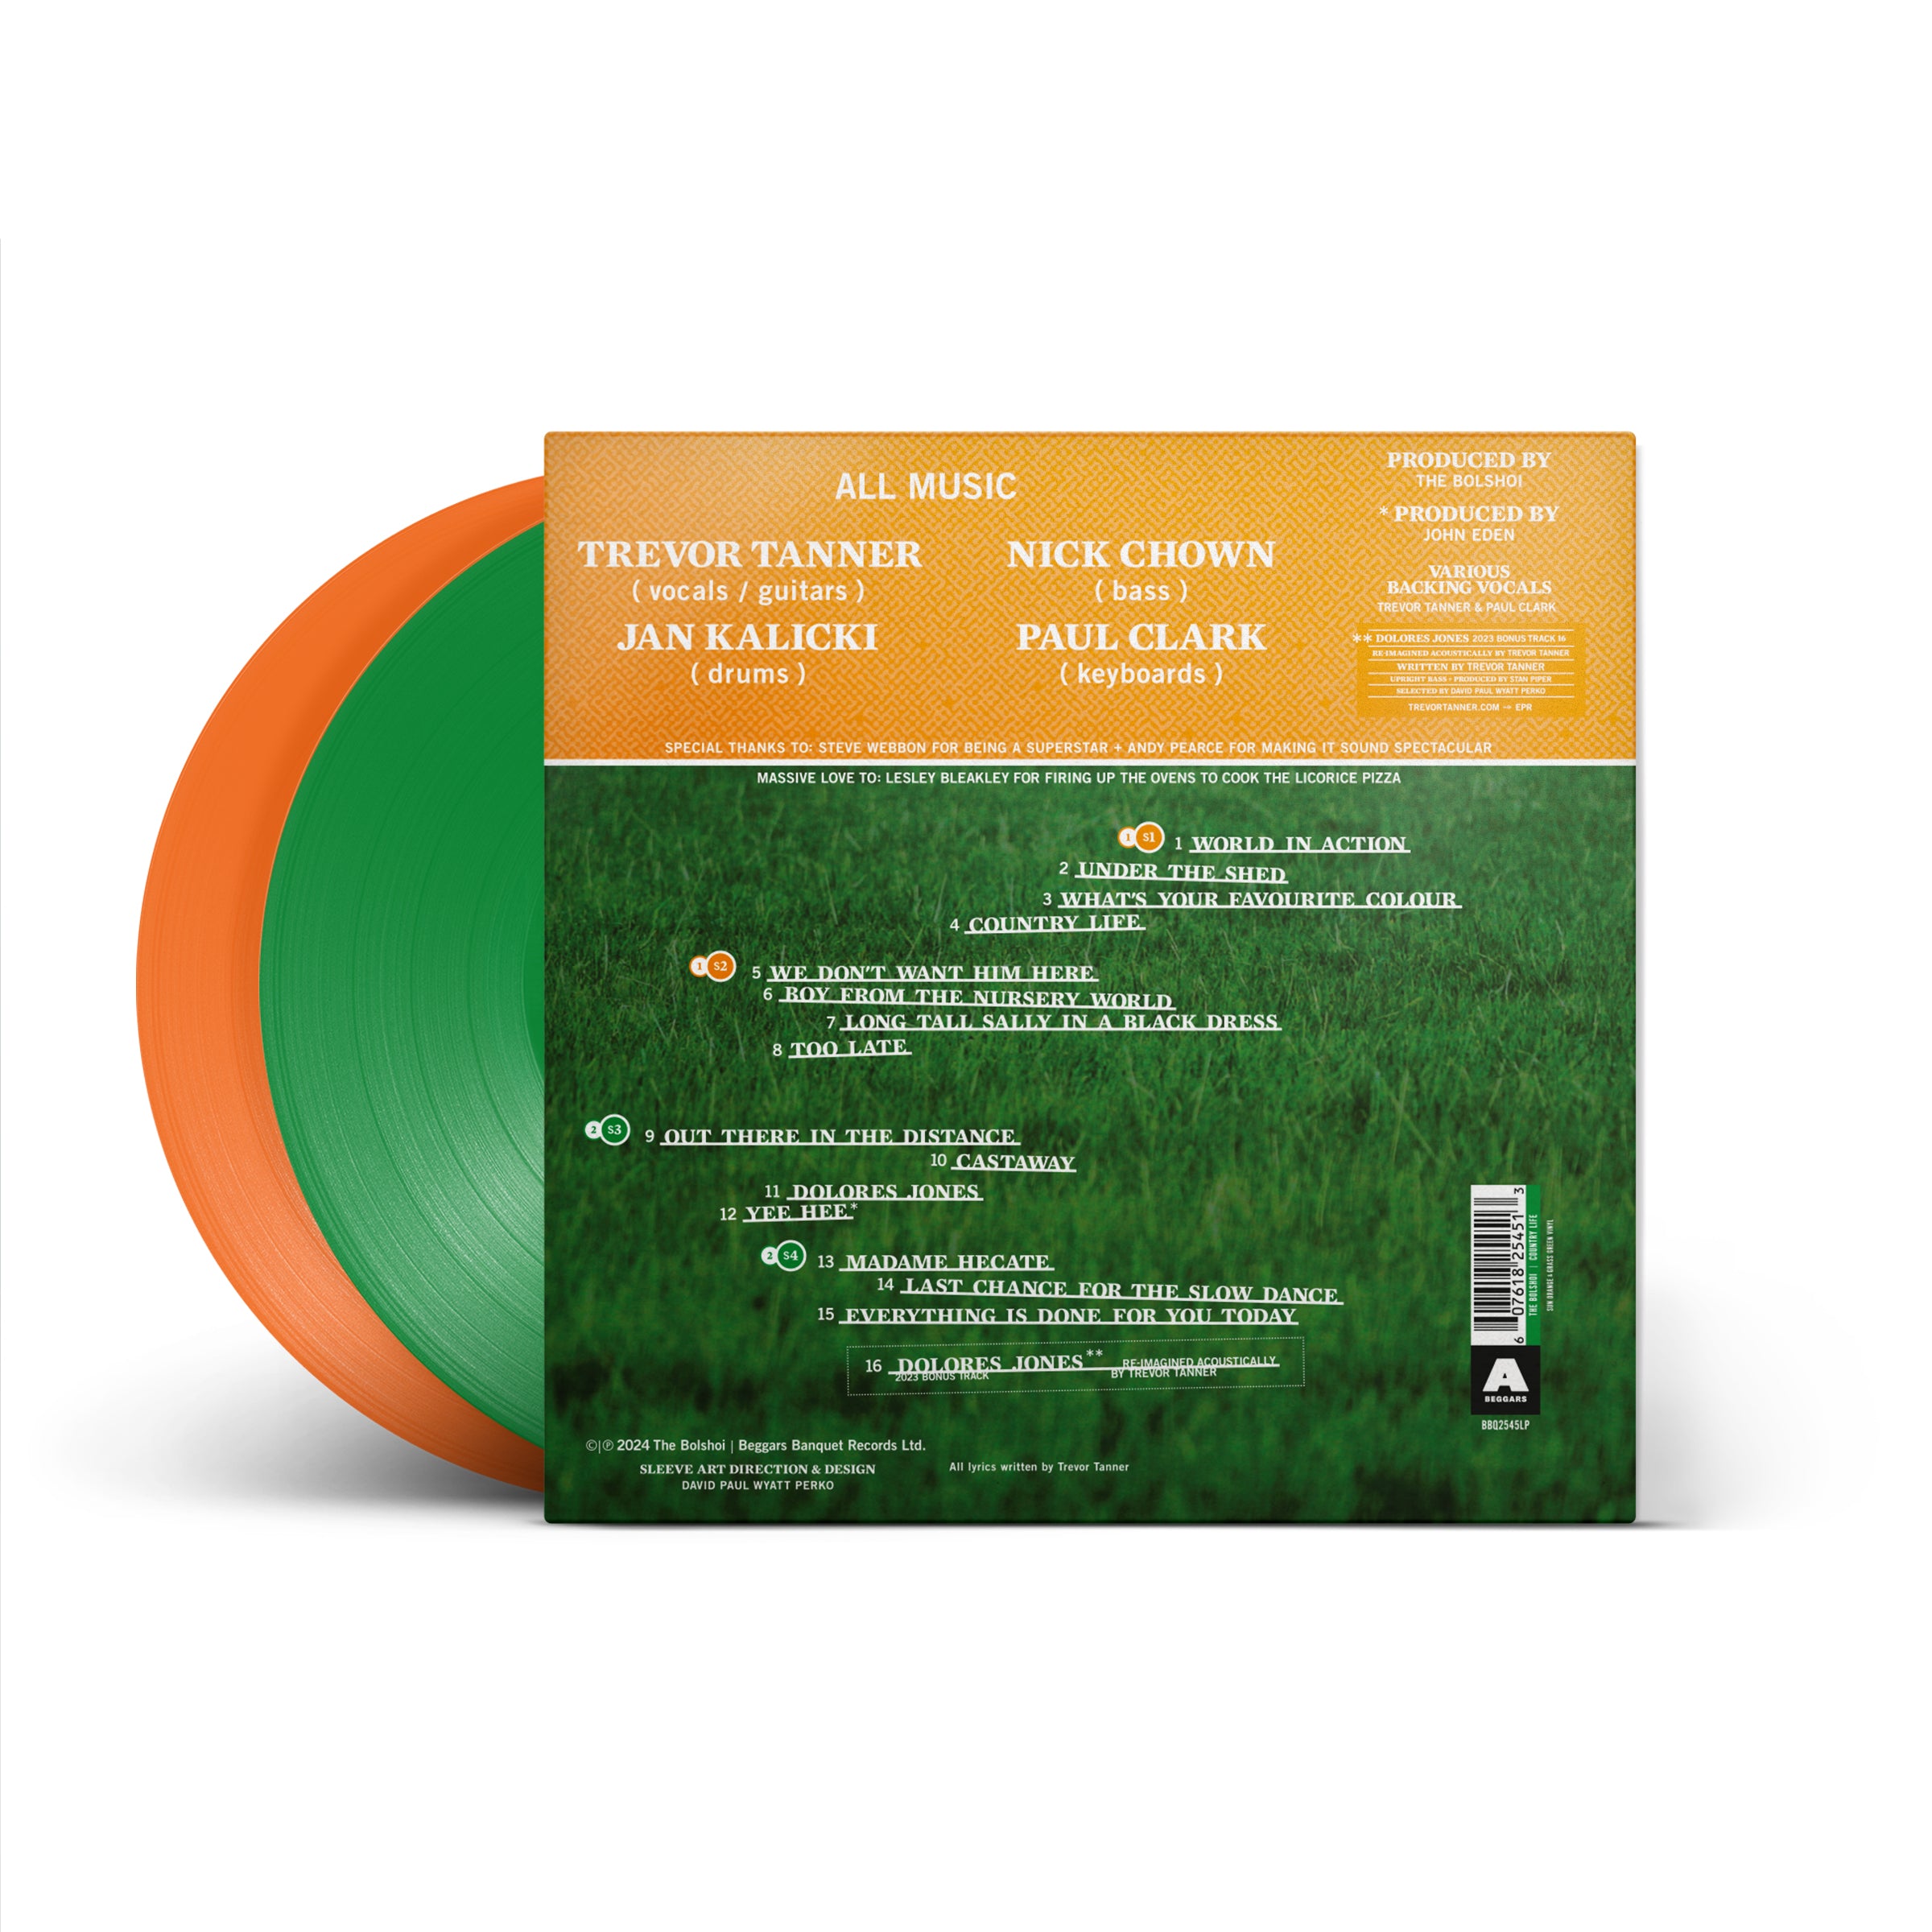 The Bolshoi - Country Life: Orange & Green Vinyl 2LP